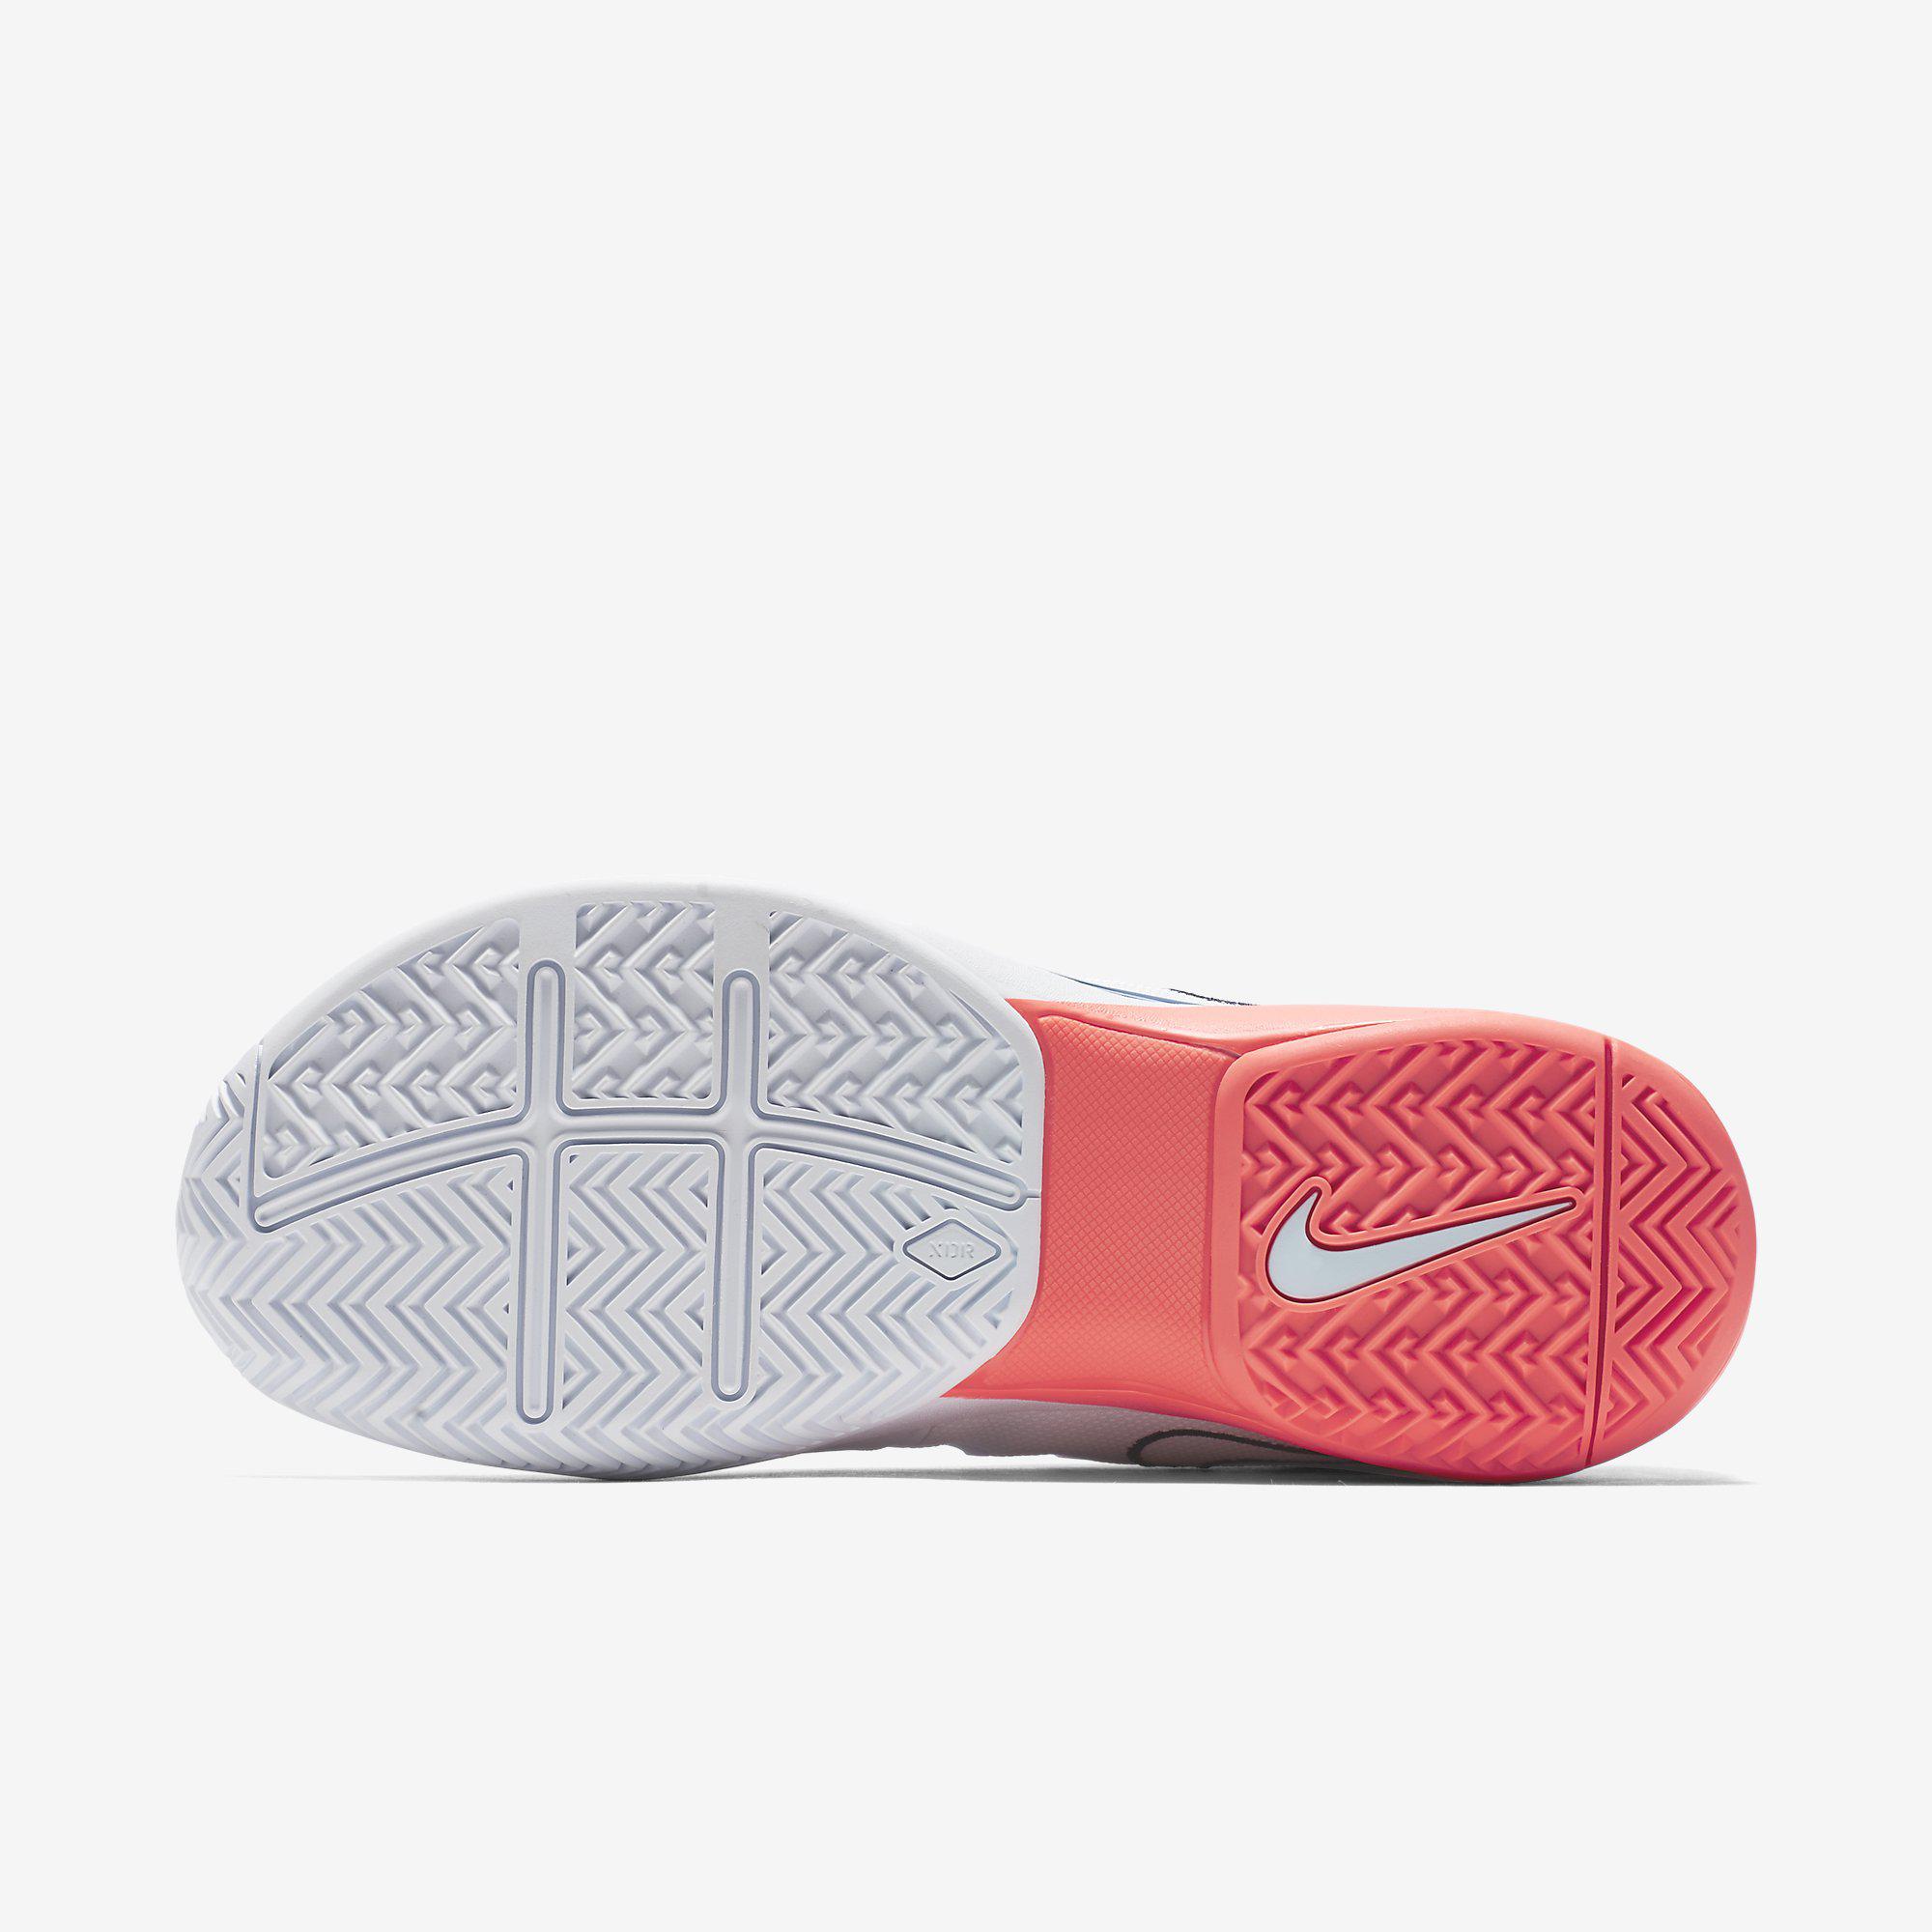 Nike Womens Zoom Vapor 9.5 Tennis Shoes - White/Navy/Bright Mango ...